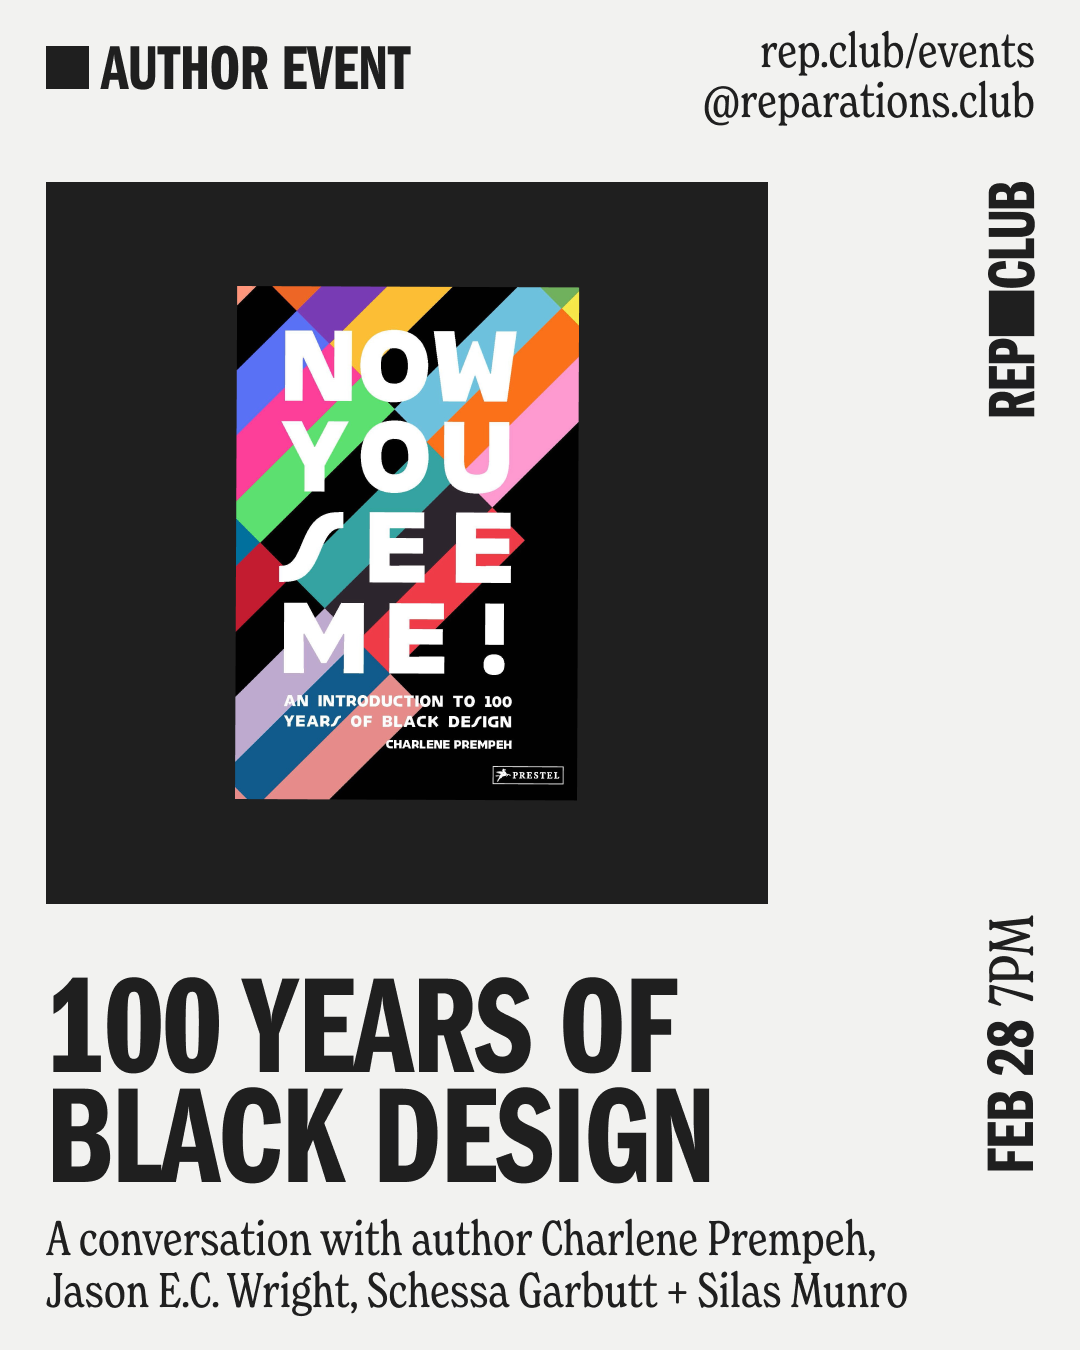 Feb 28th EVENT: Now You See Me // 100 Years of Black Design w/ Charlene Prempeh, Jason E.C. Wright, Schessa Garbutt, + Silas Munro